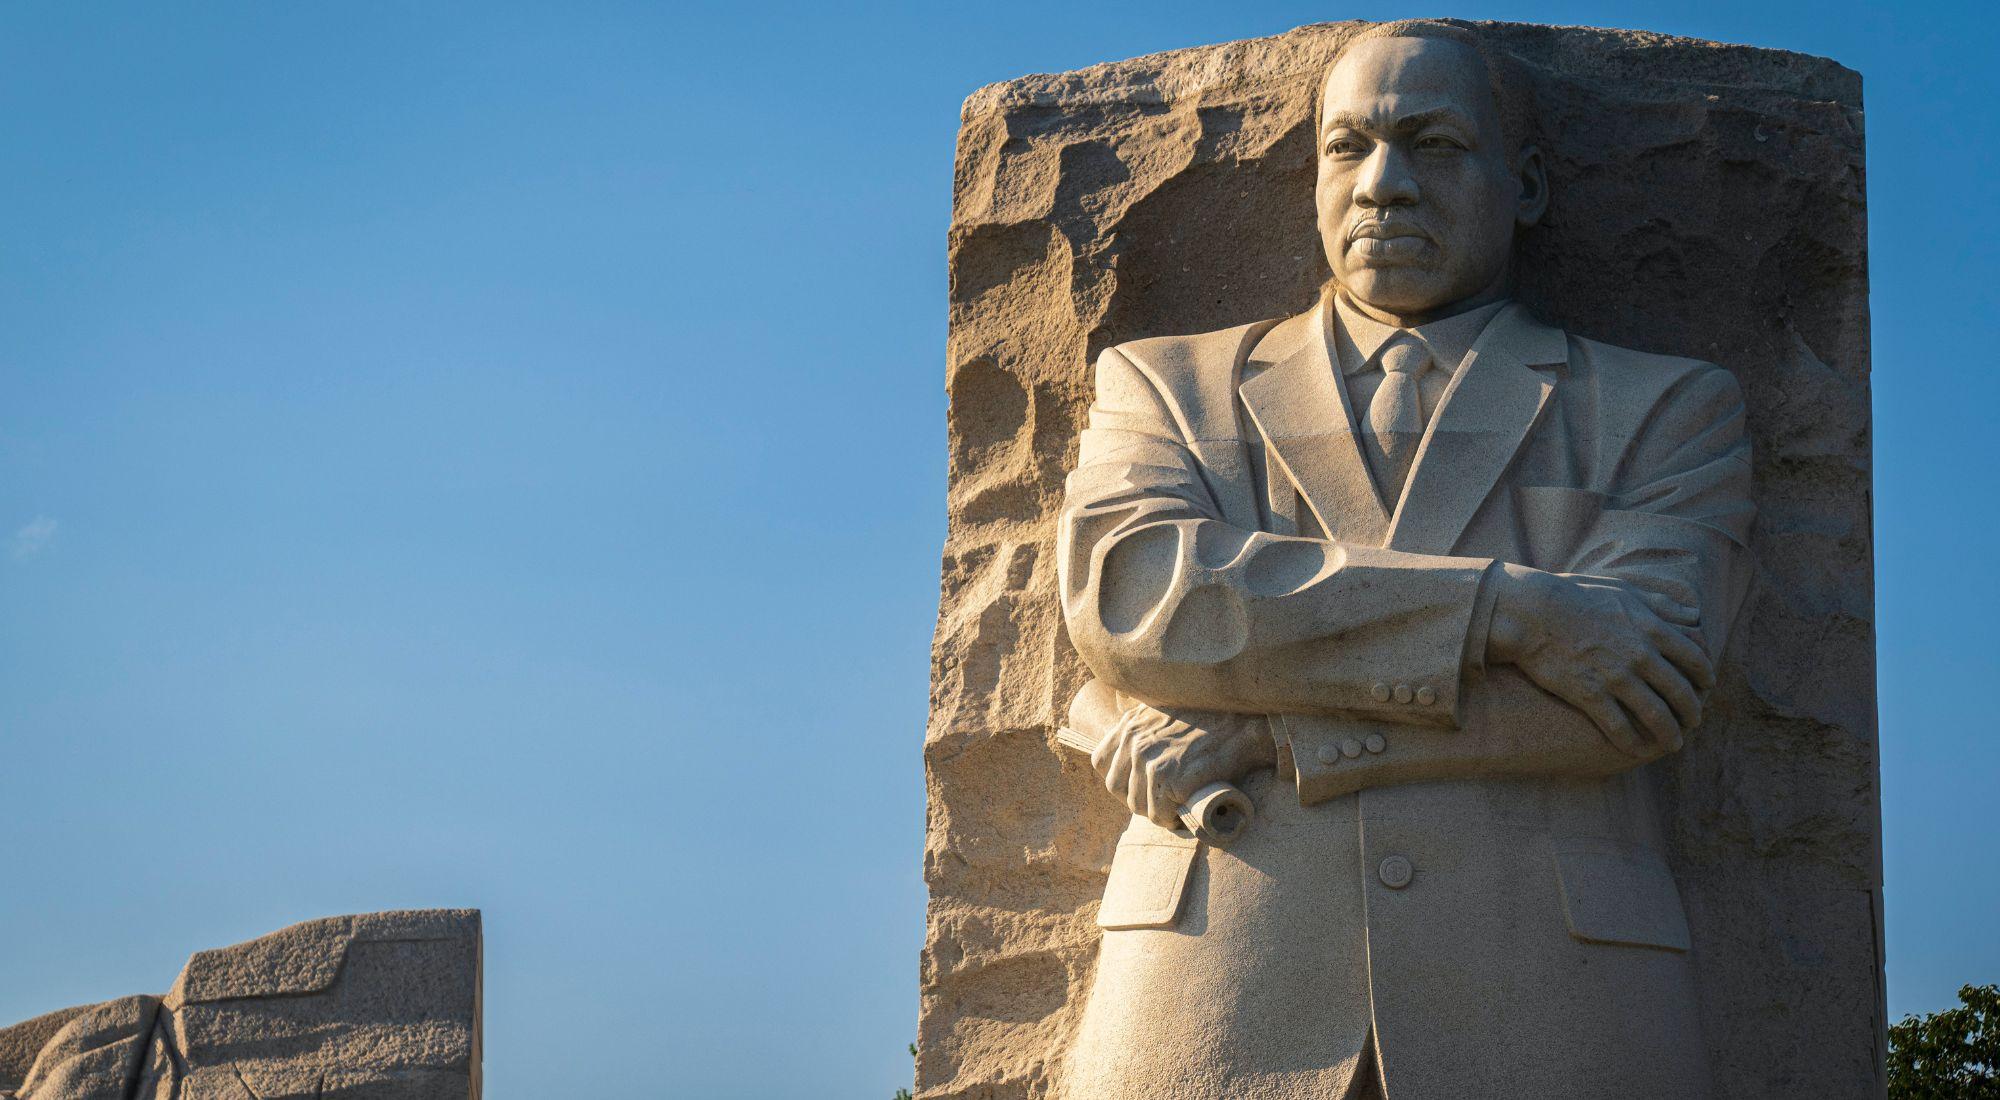 Estados Unidos rinde homenaje al legado de Martin Luther King Jr.